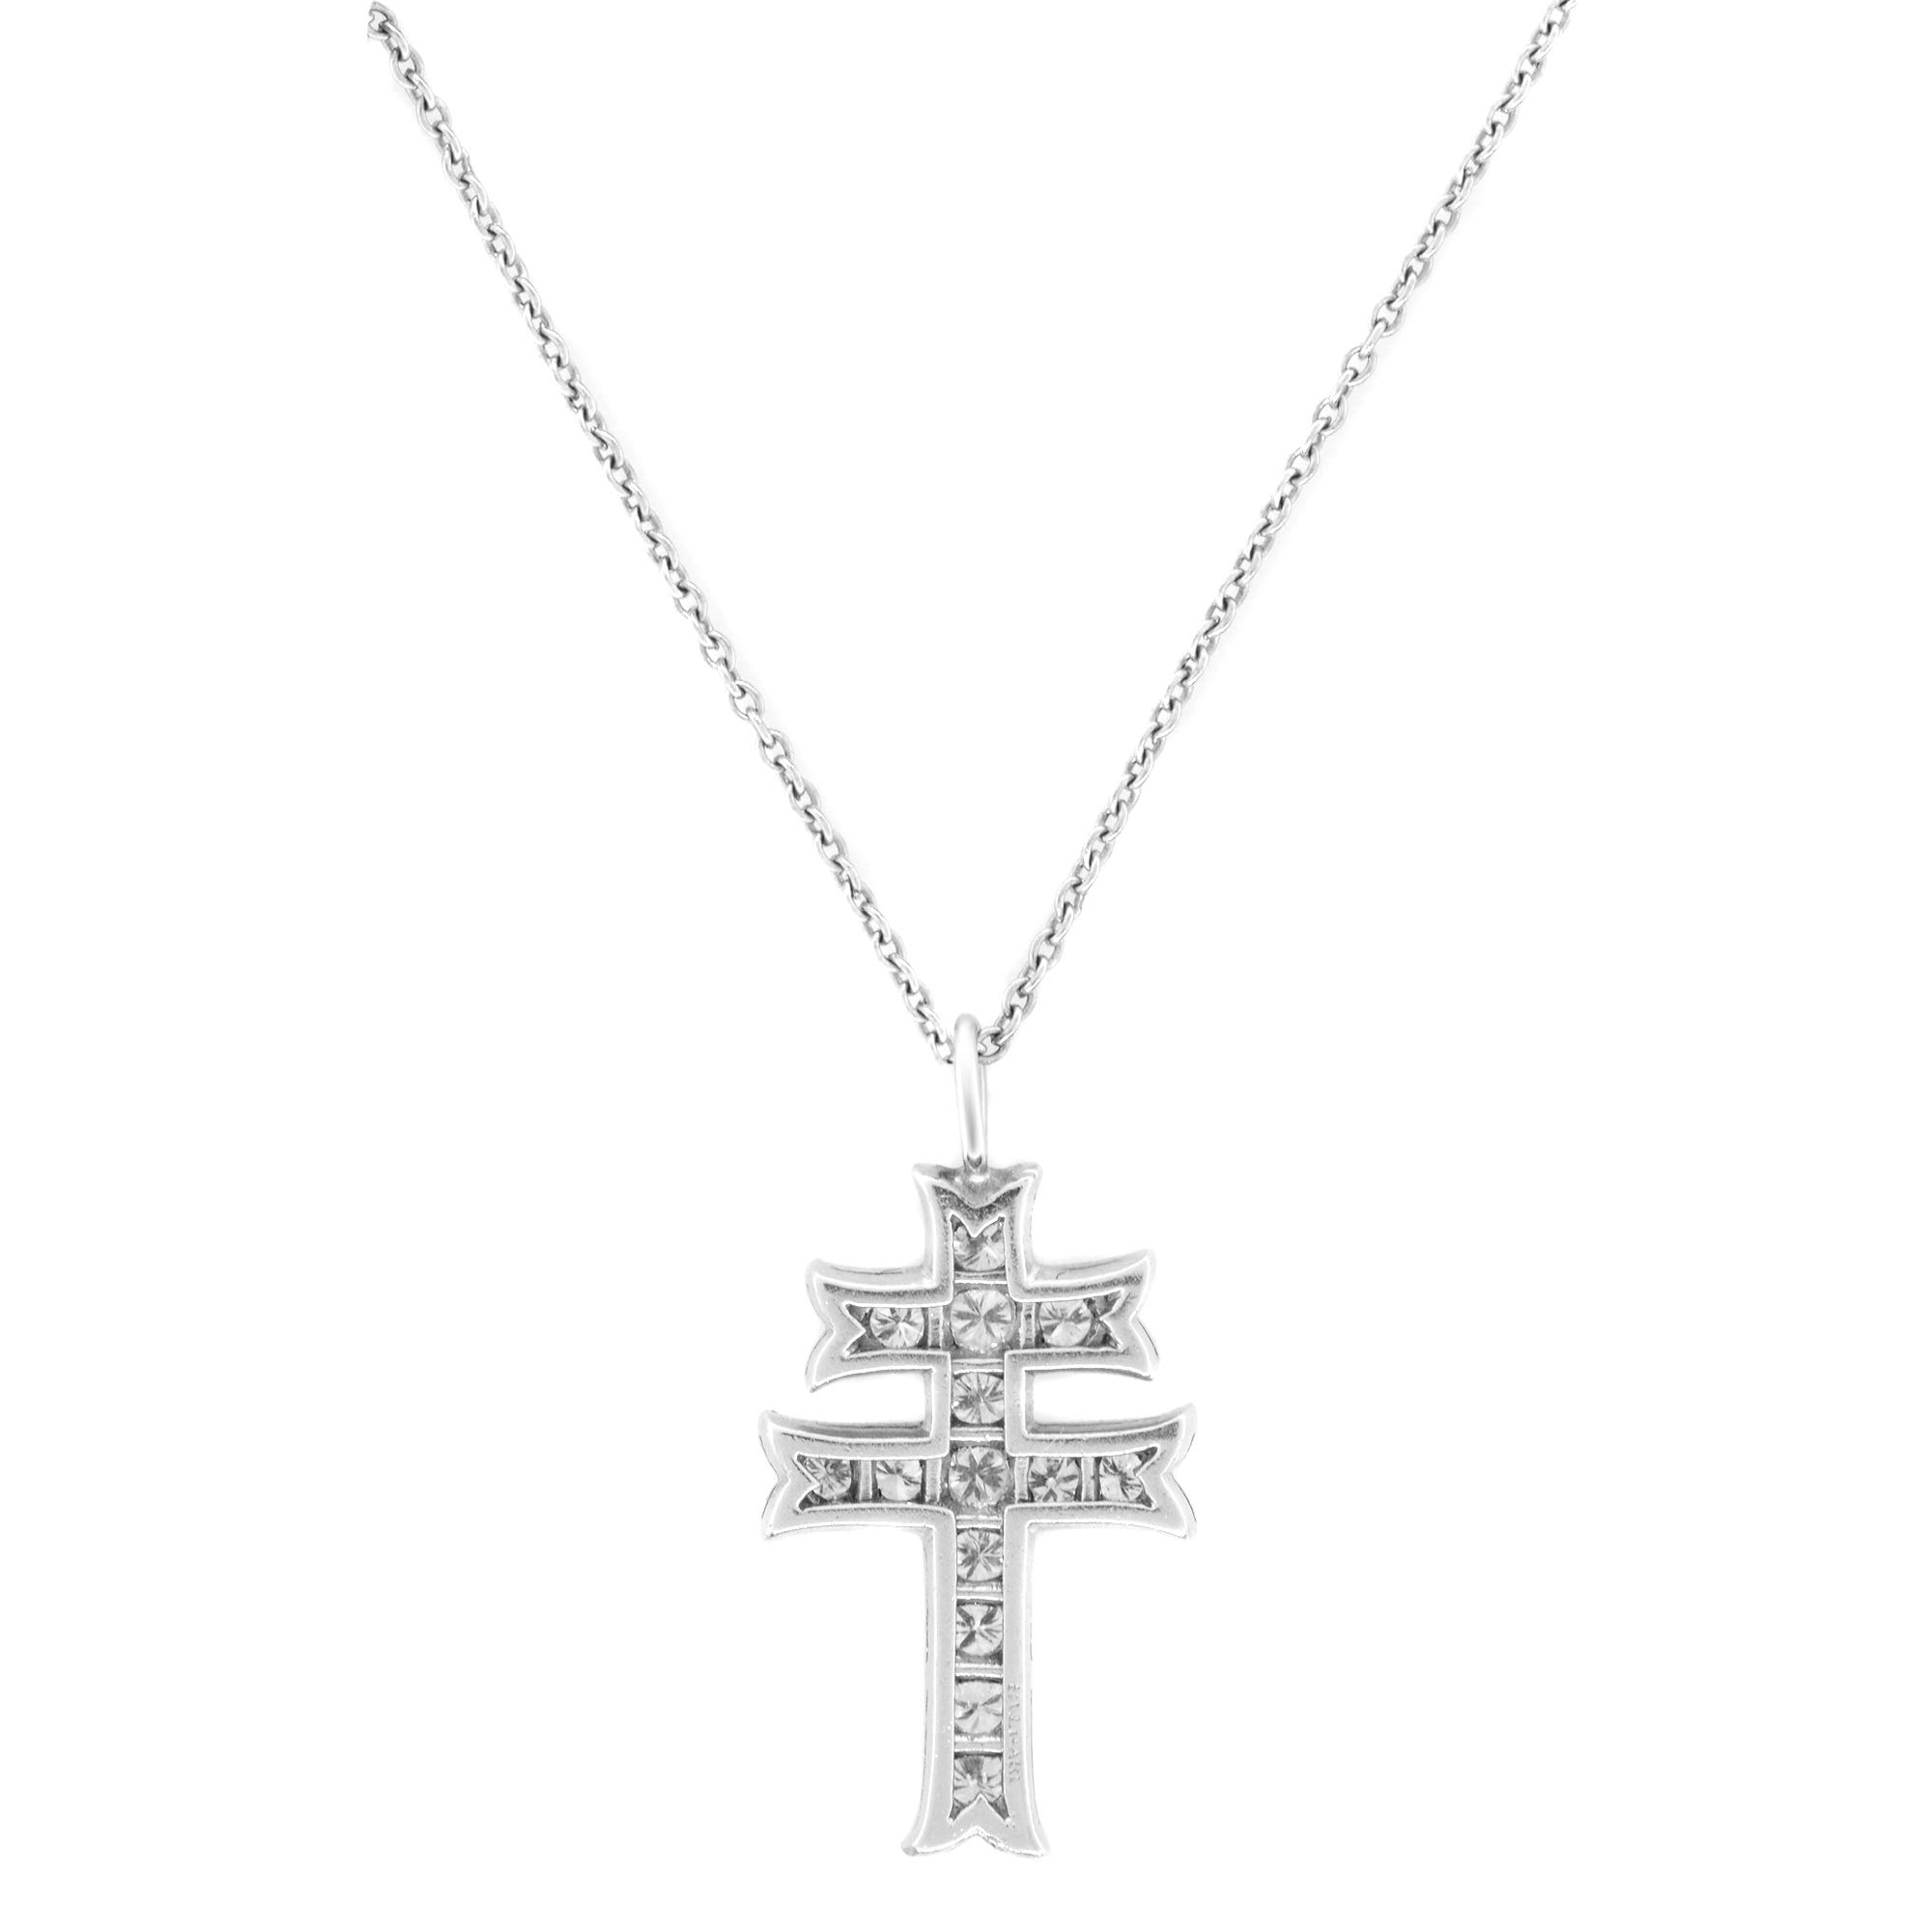 Rachel Koen Platinum Necklace with 0.33cttw Diamond Cross Pendant